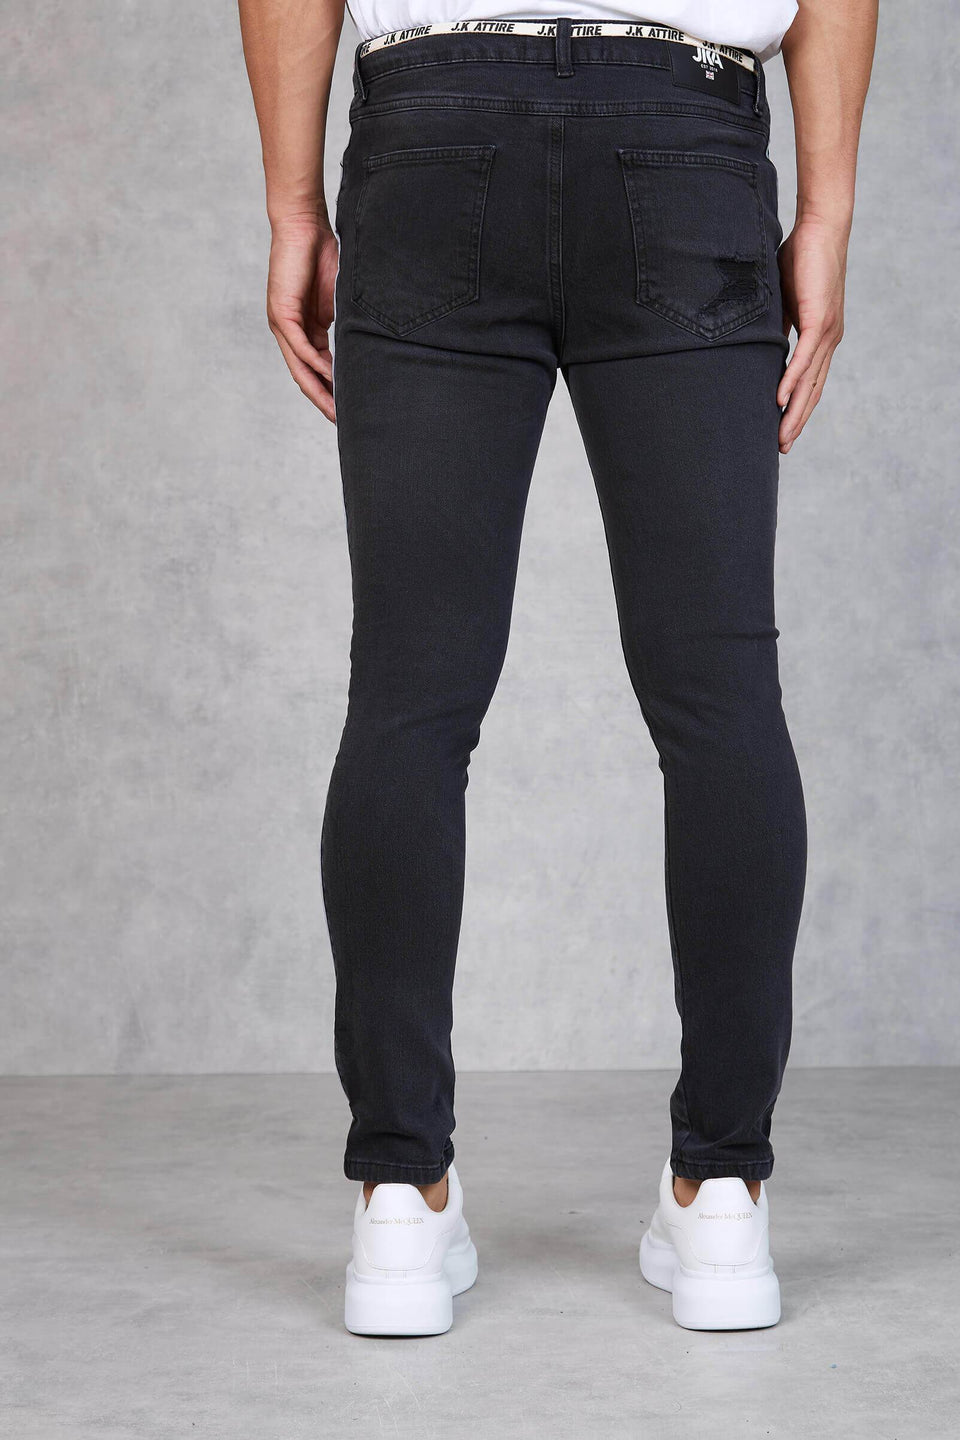 F2 - Hermanos Sand Wash Distressed Skinny Jeans - Black